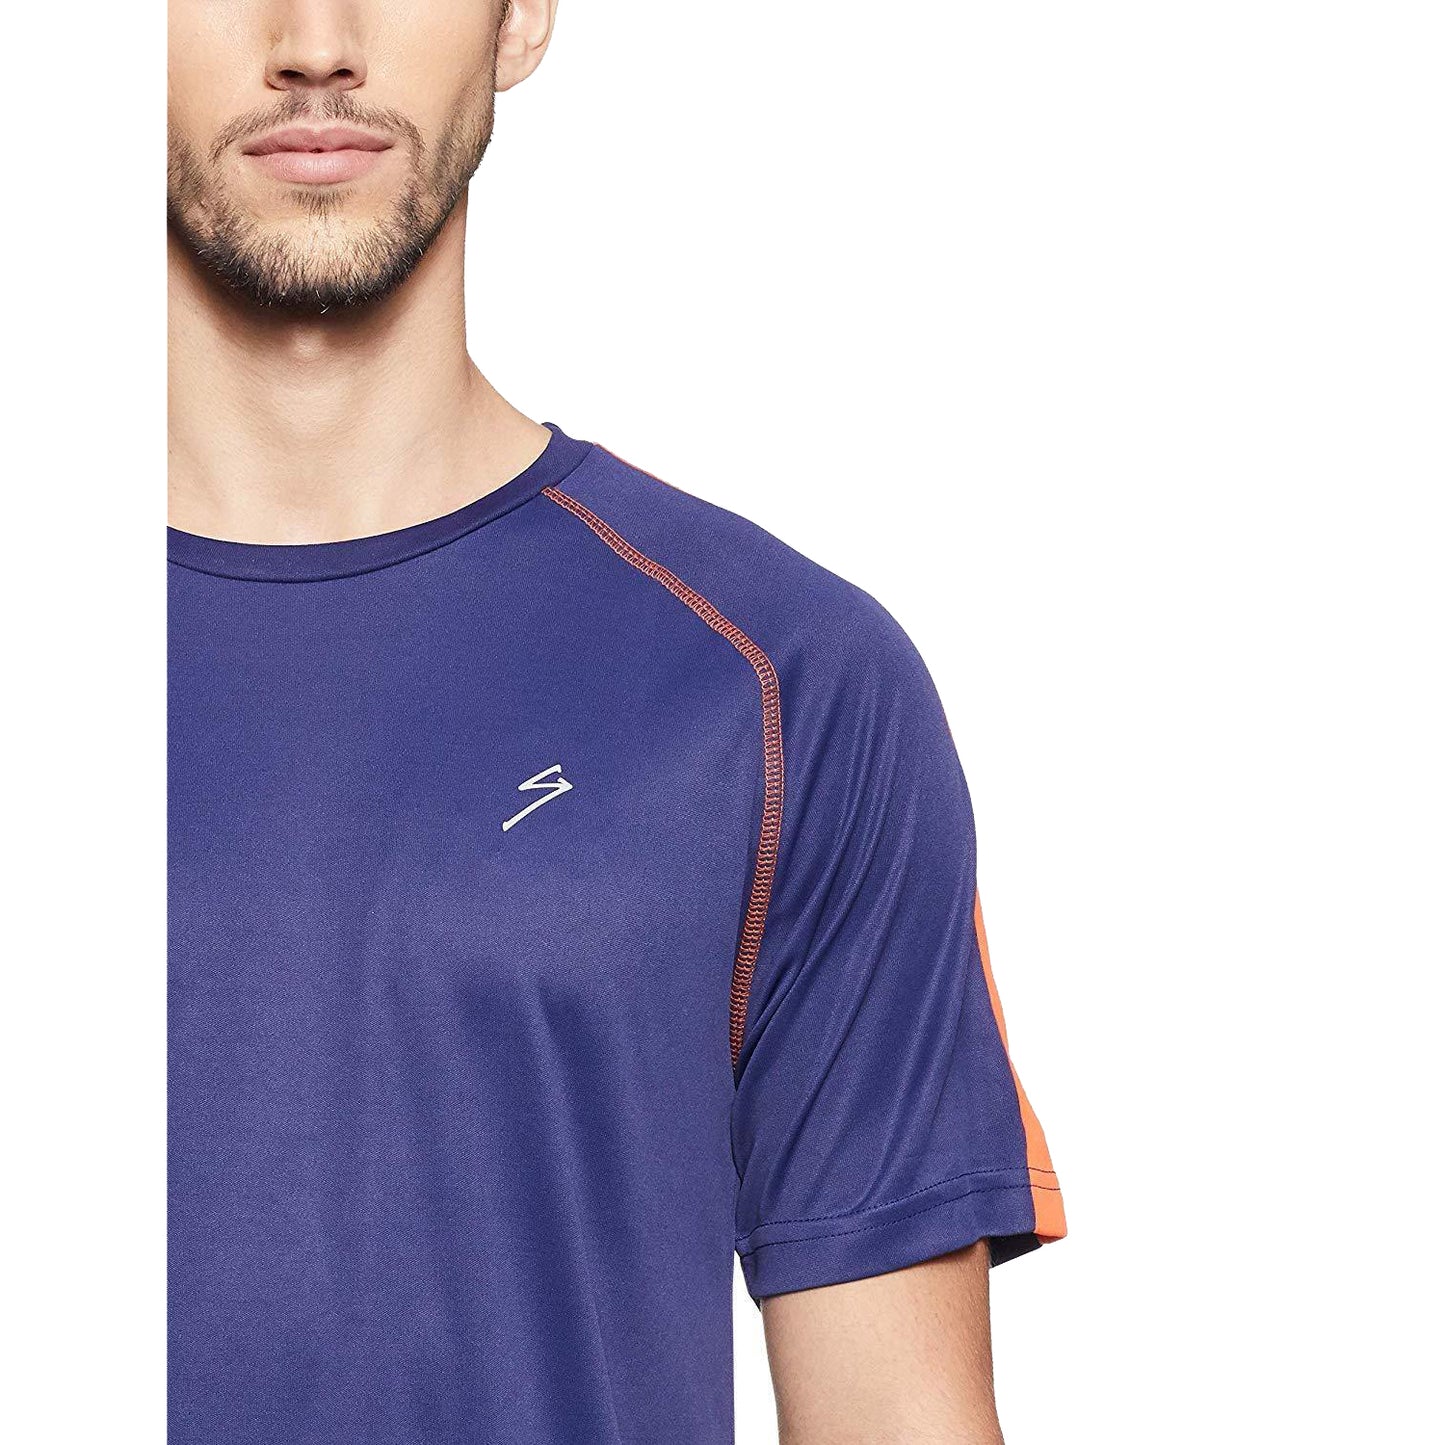 SG RTS2212 Polyester Round Neck Sports T-Shirt - Navy - Best Price online Prokicksports.com